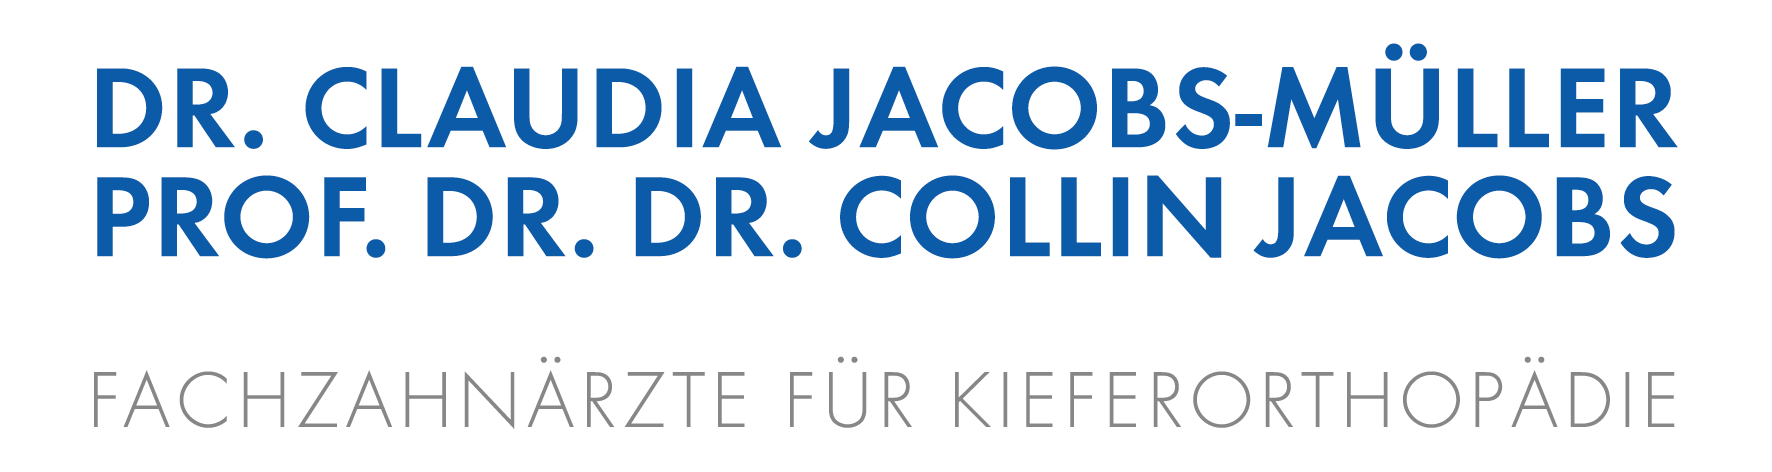 Fachzahnarztpraxis für Kieferorthopädie Dr. Claudia Jacobs-Müller Prof. Dr. Dr. Collin Jacobs